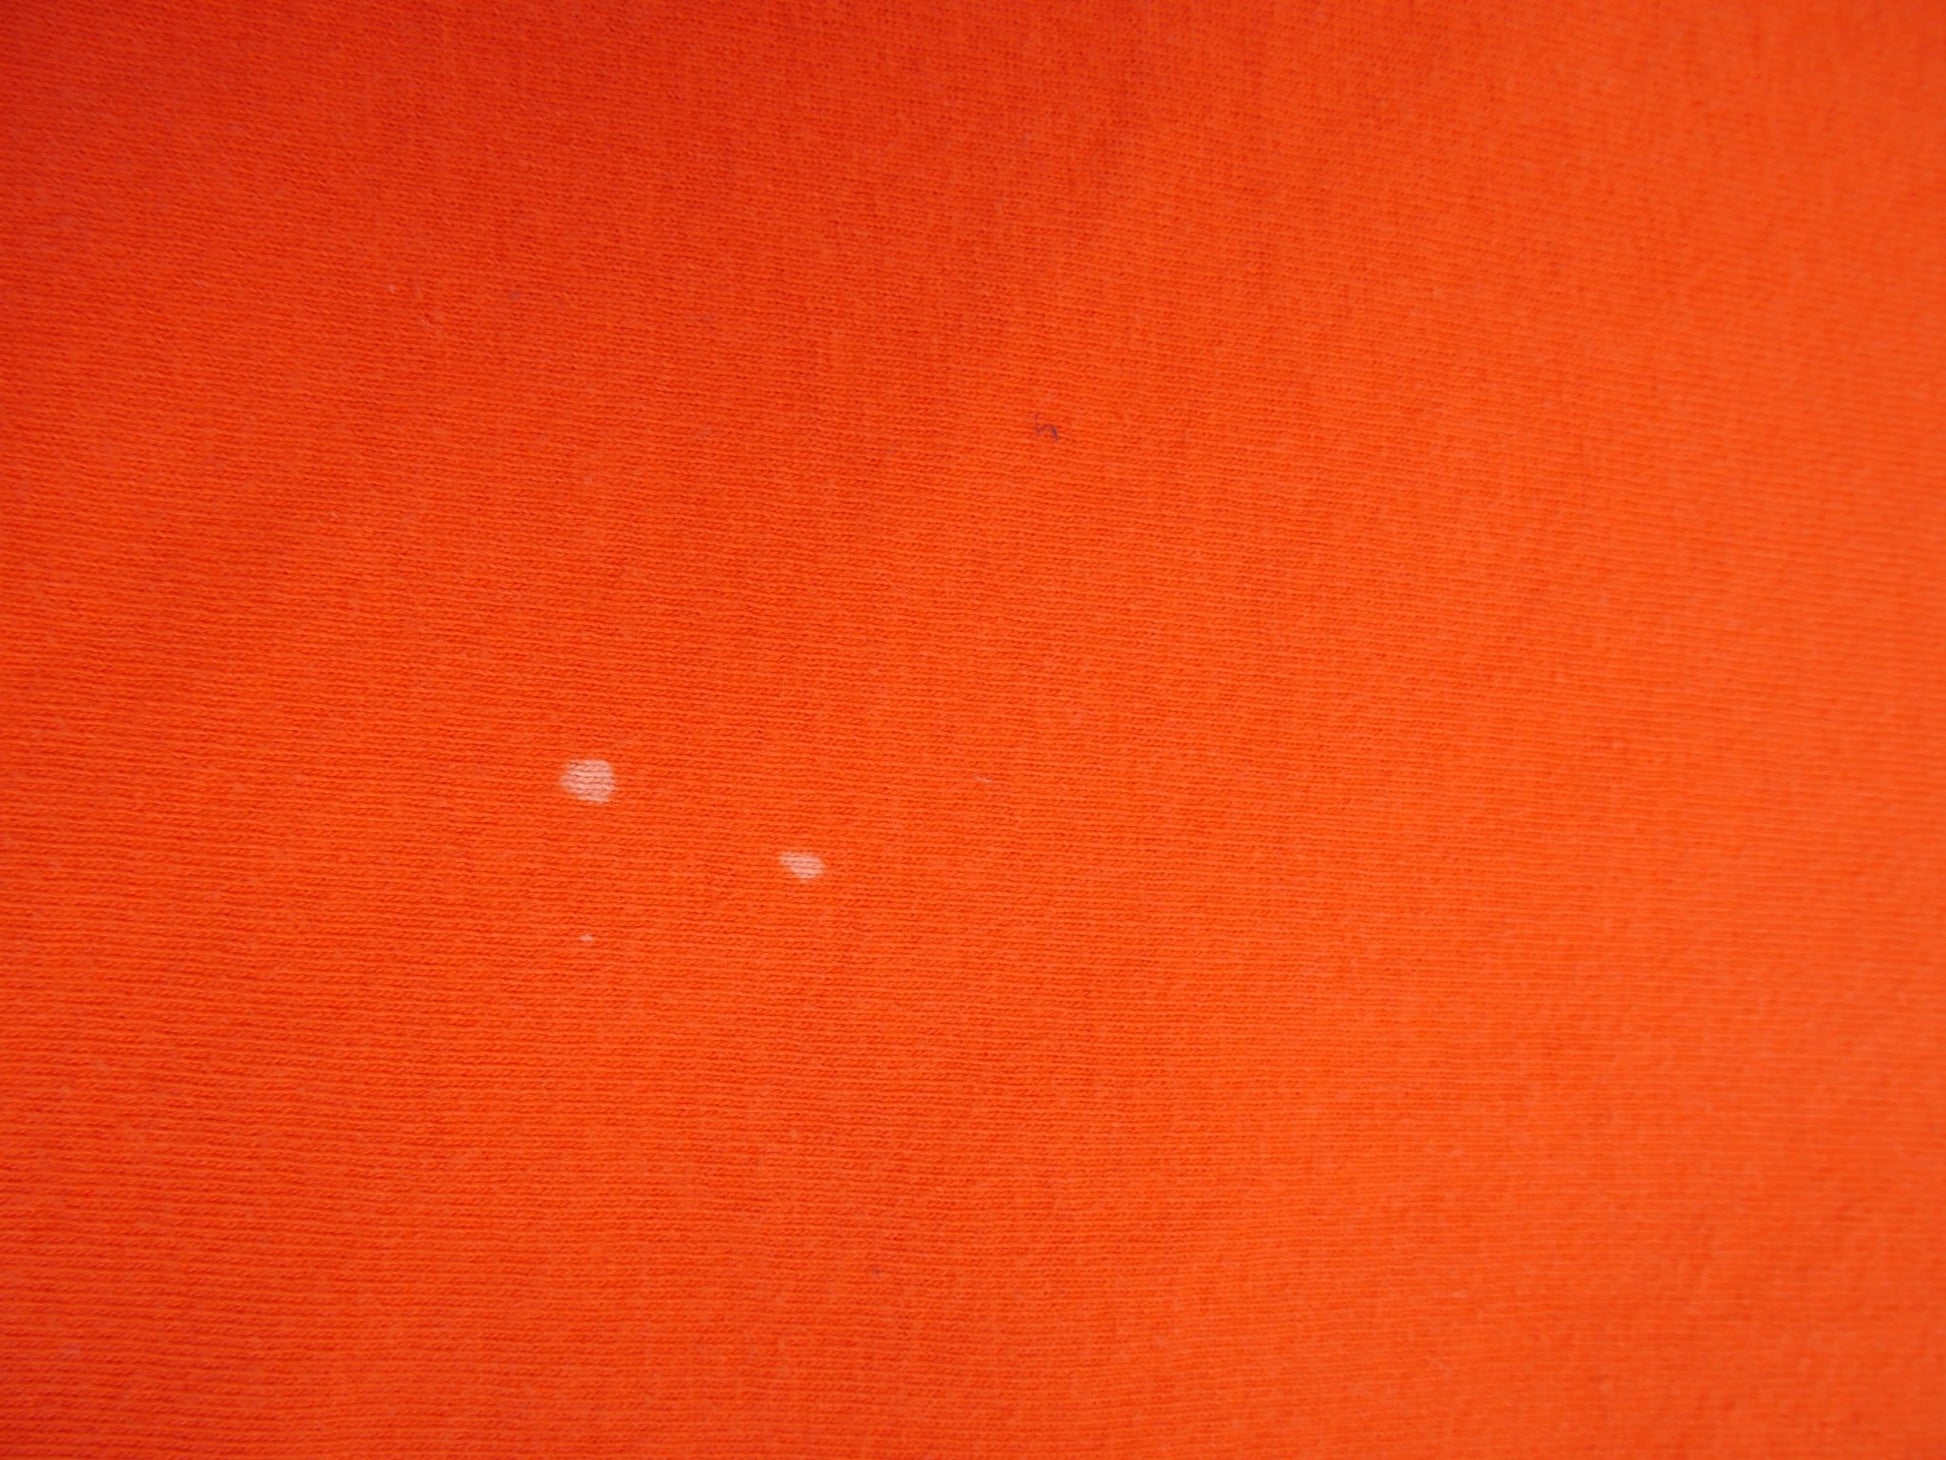 gildan printed 'Syracuse Orange' Shirt - Peeces